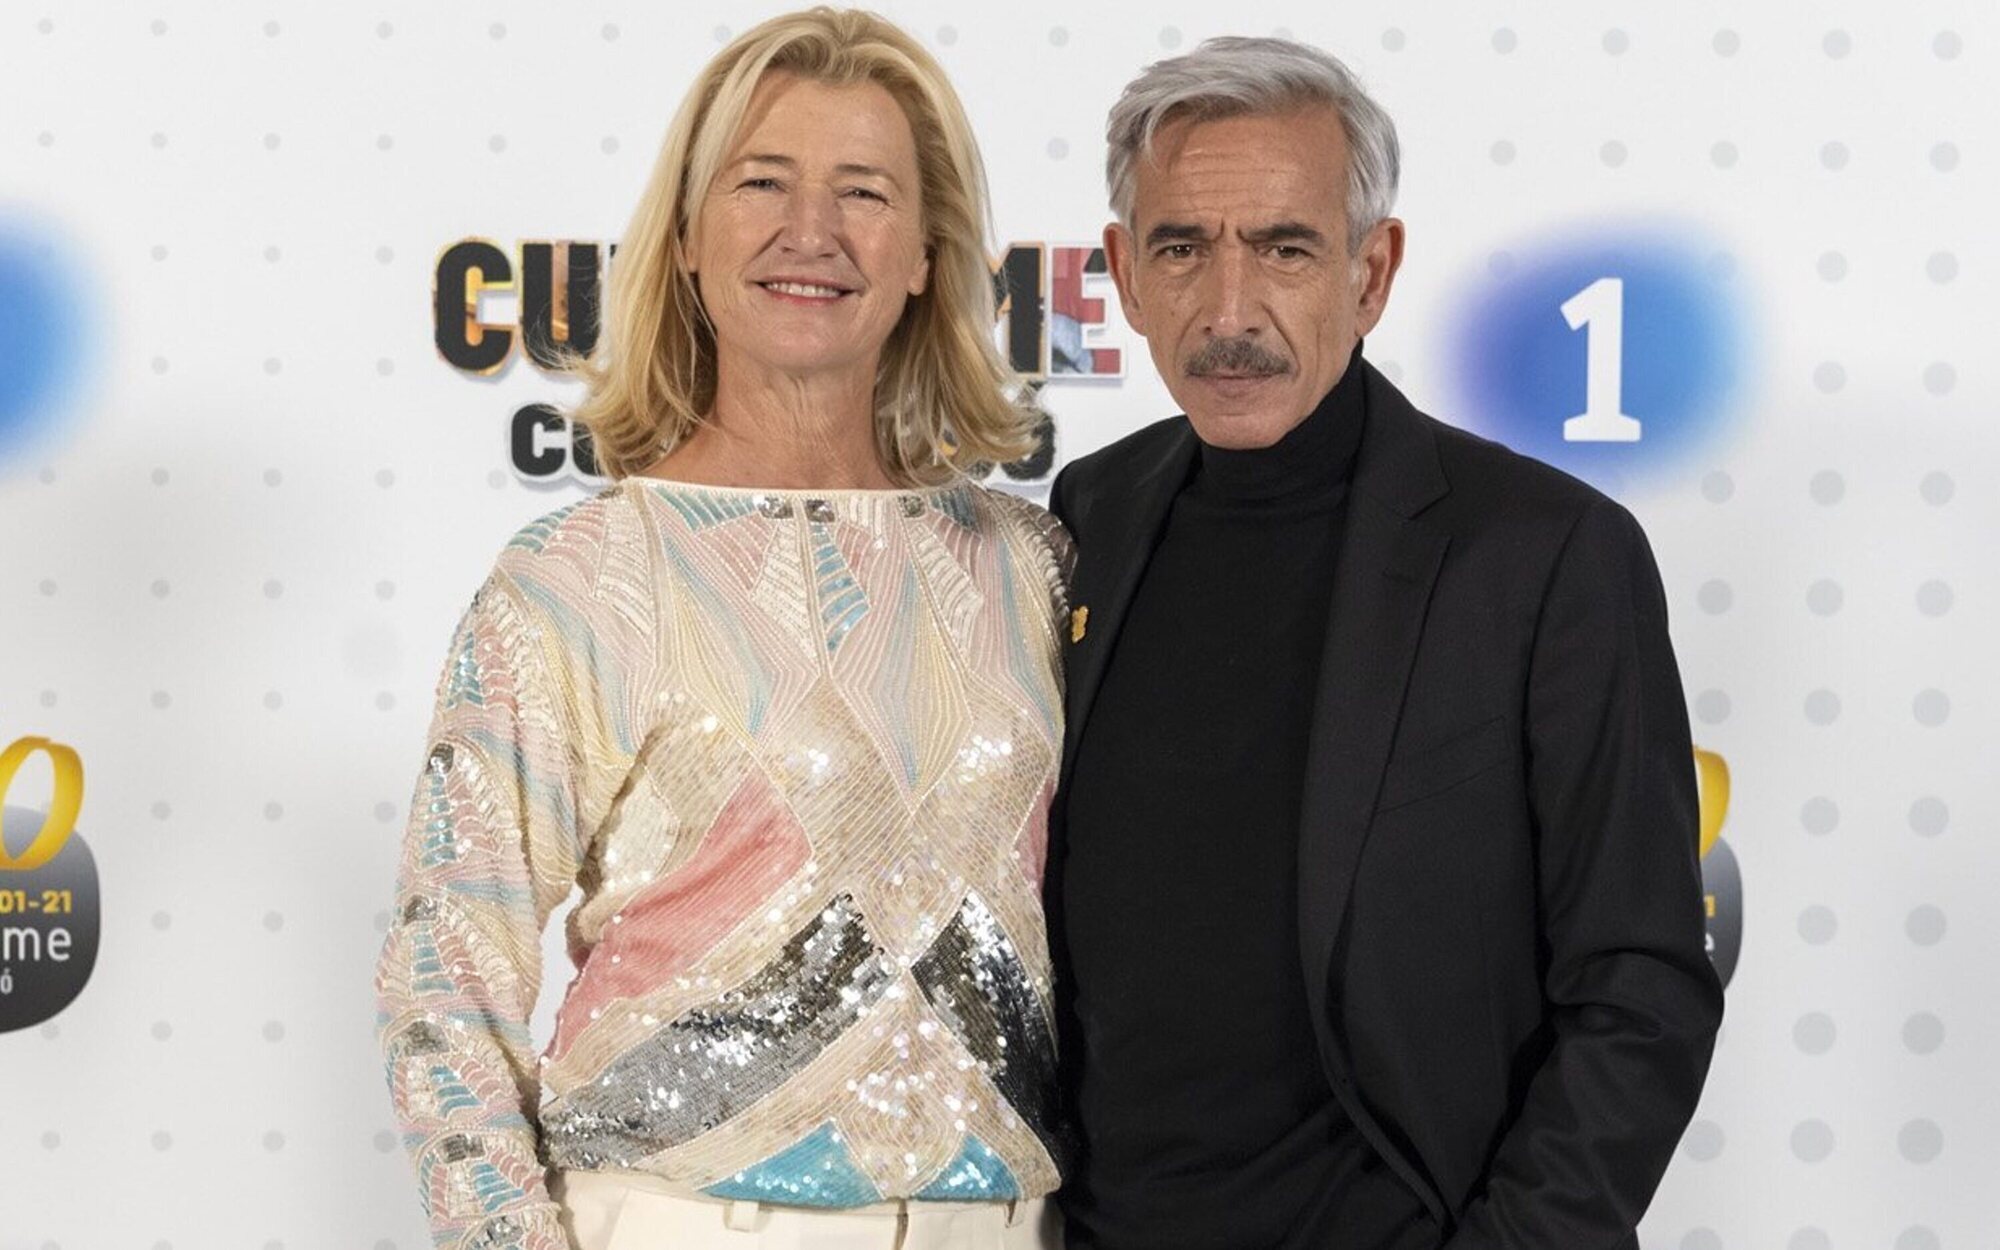 Imanol Arias y Ana Duato cobran 47.054 euros por cada episodio de 'Cuéntame'